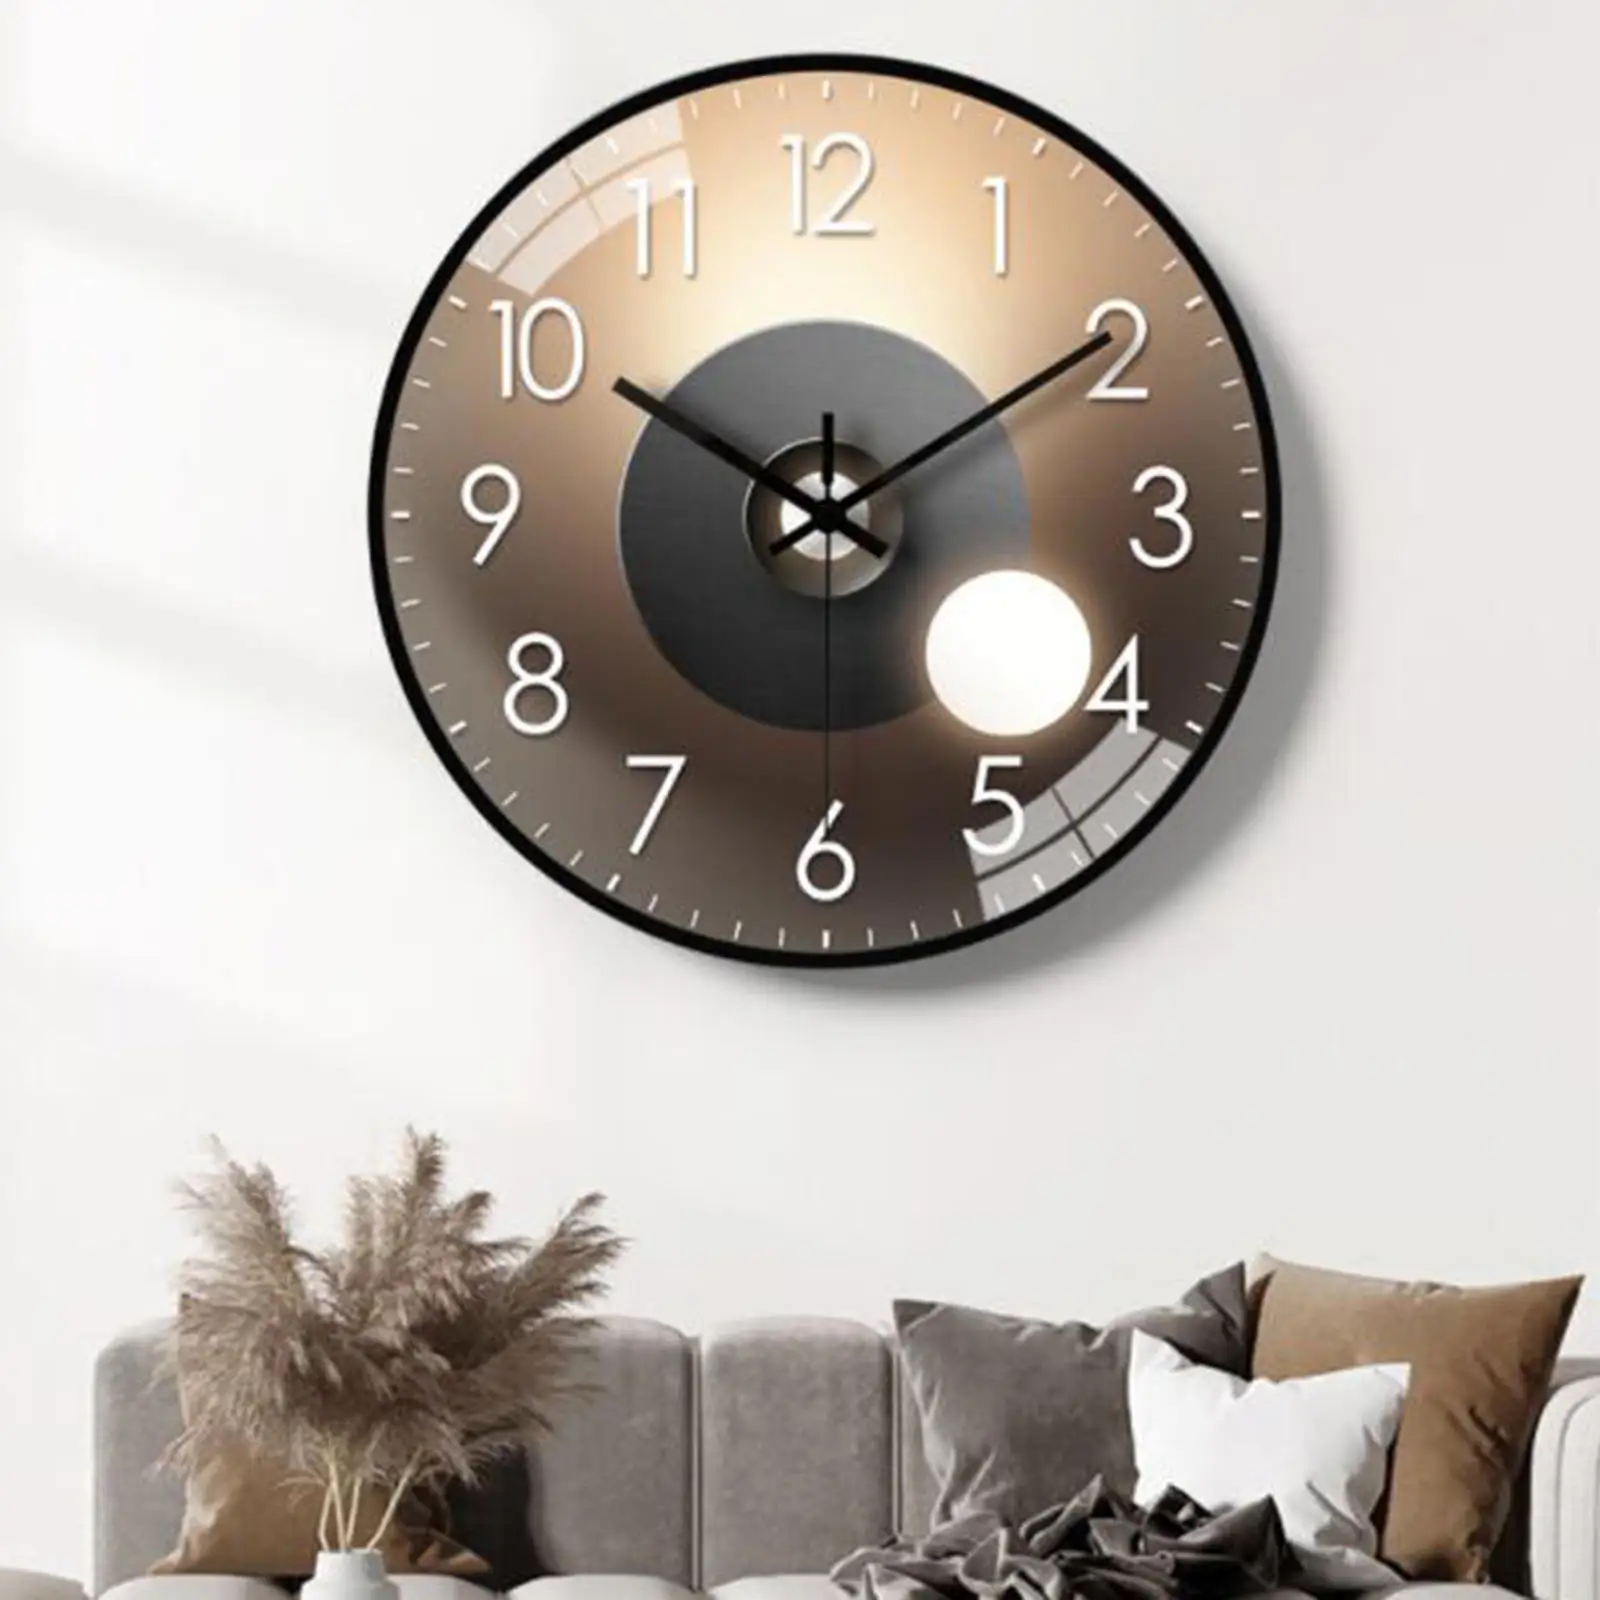 30cm Large Round Digital Wall Clock Watch Silent Quartz Indoor Classroom School Home Office Hotel Shops Cafe Clocks Decoration